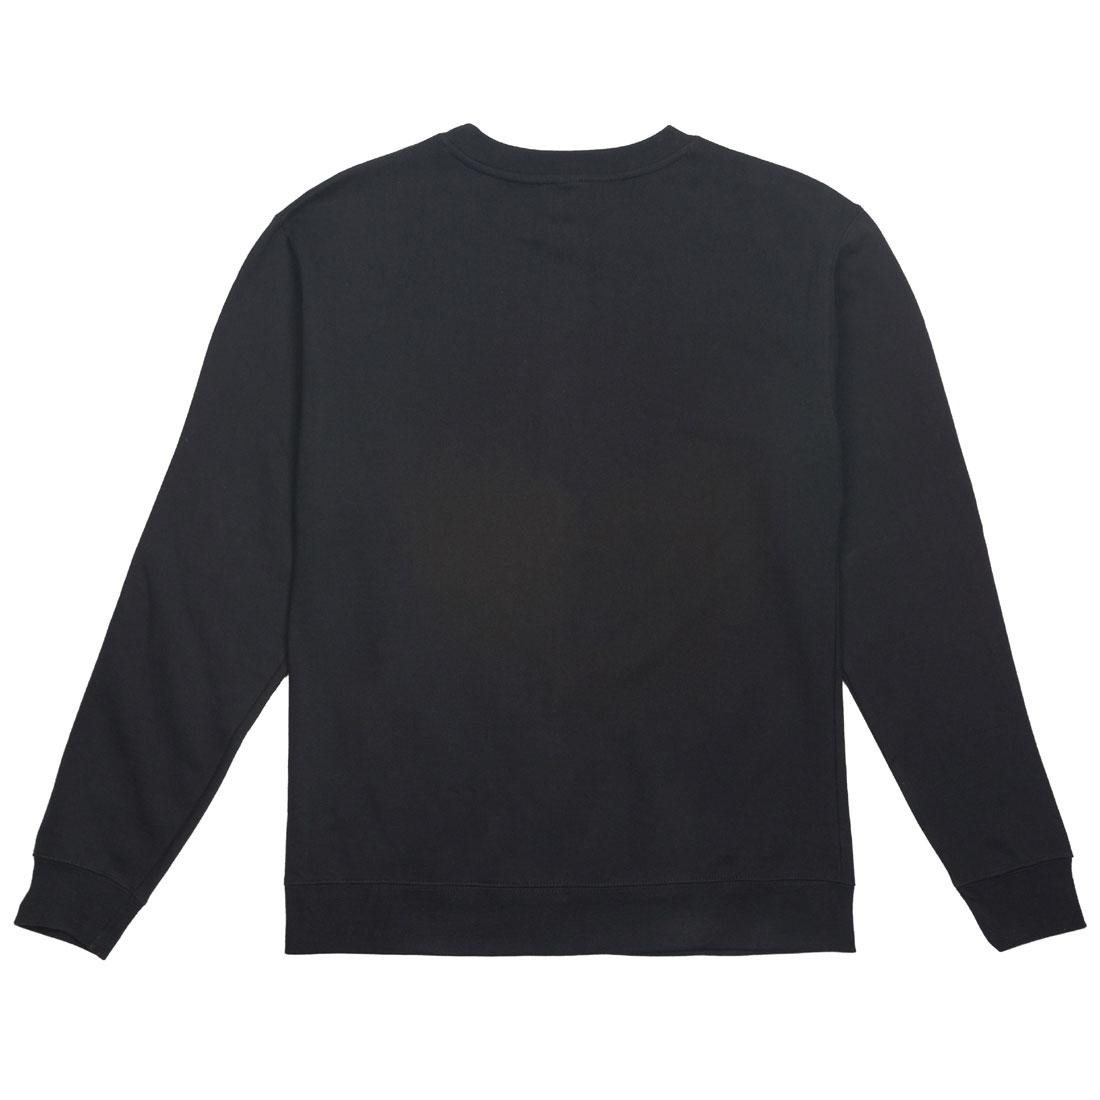 BAIT x Astro Boy Men Vintage Crewneck Sweater black